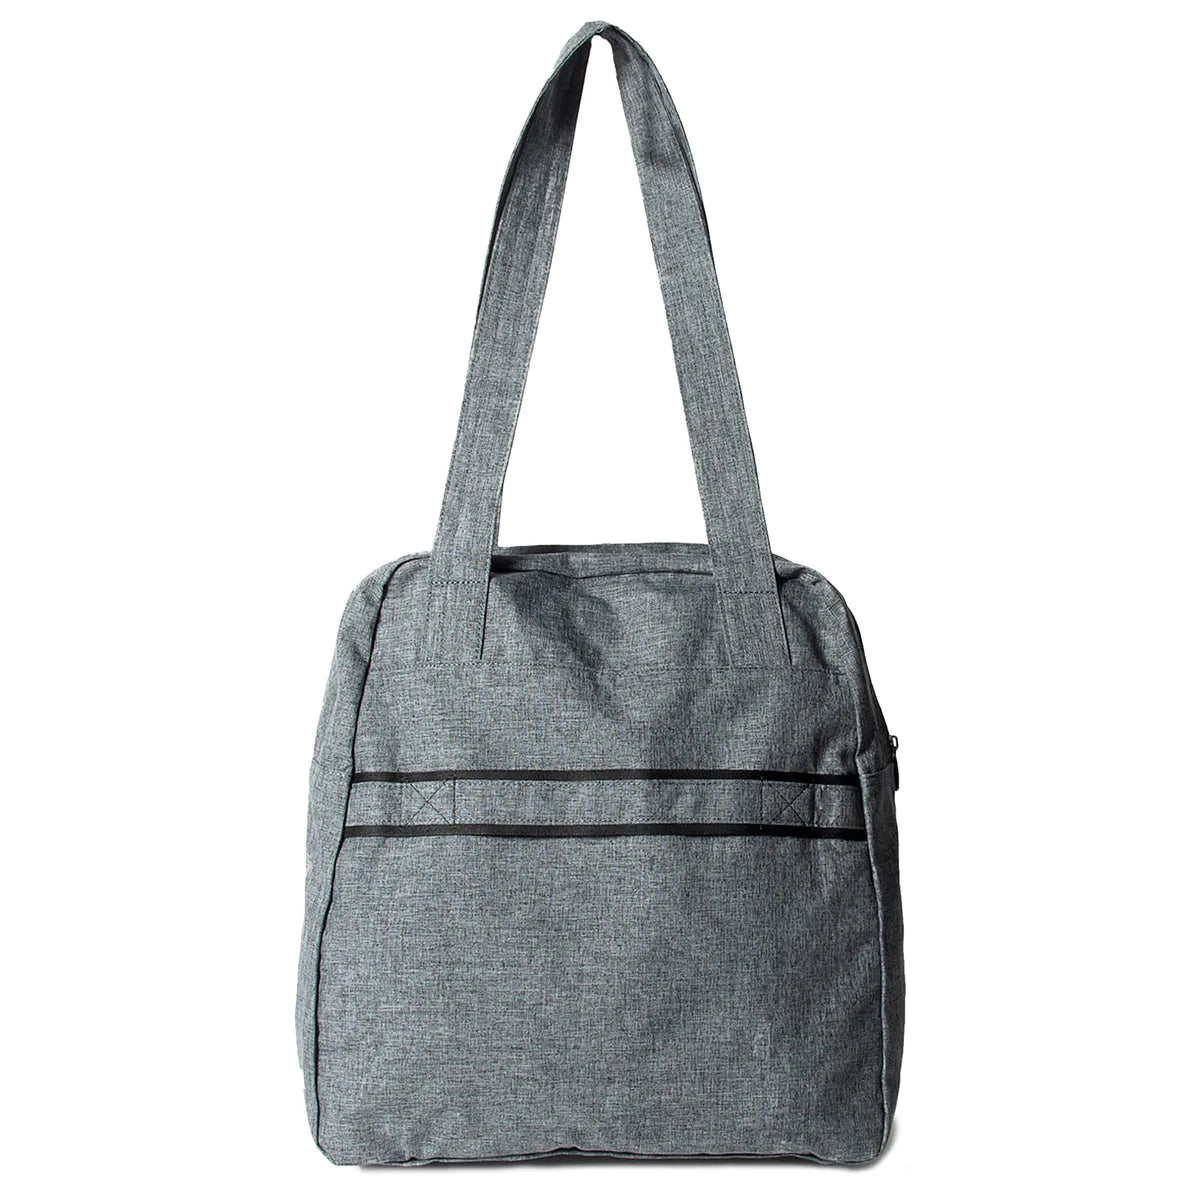 LUG Puddle Jumper Packable Tote Bag in Heather Grey